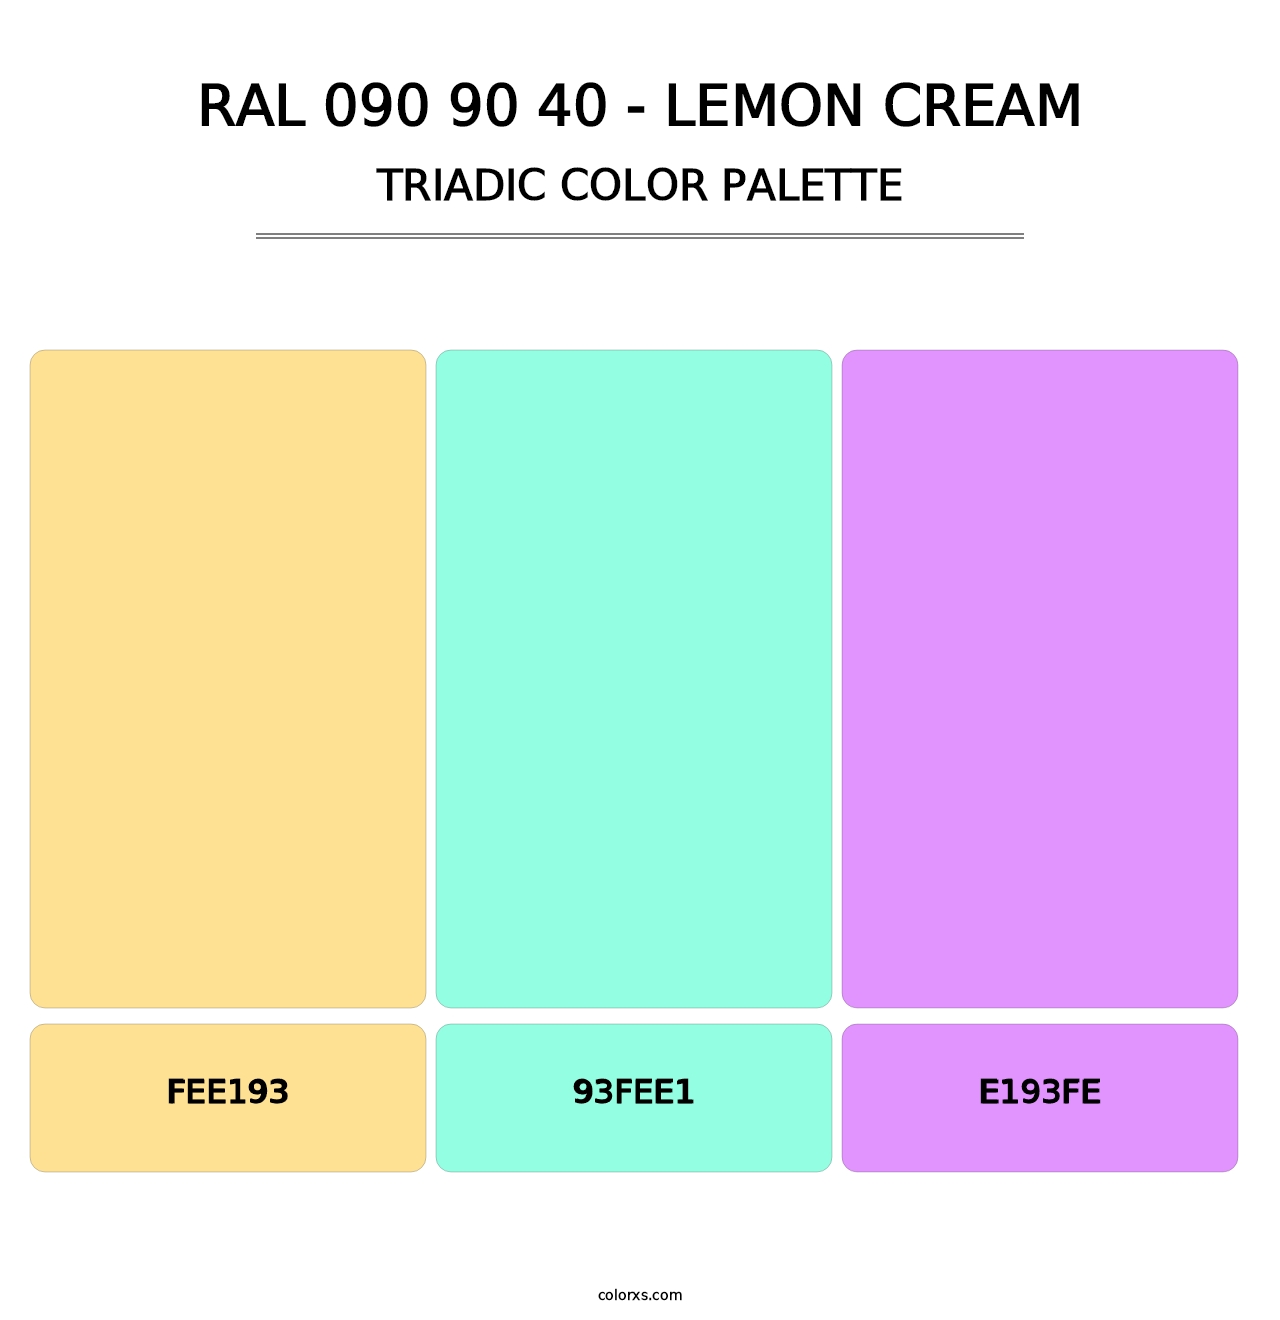 RAL 090 90 40 - Lemon Cream - Triadic Color Palette